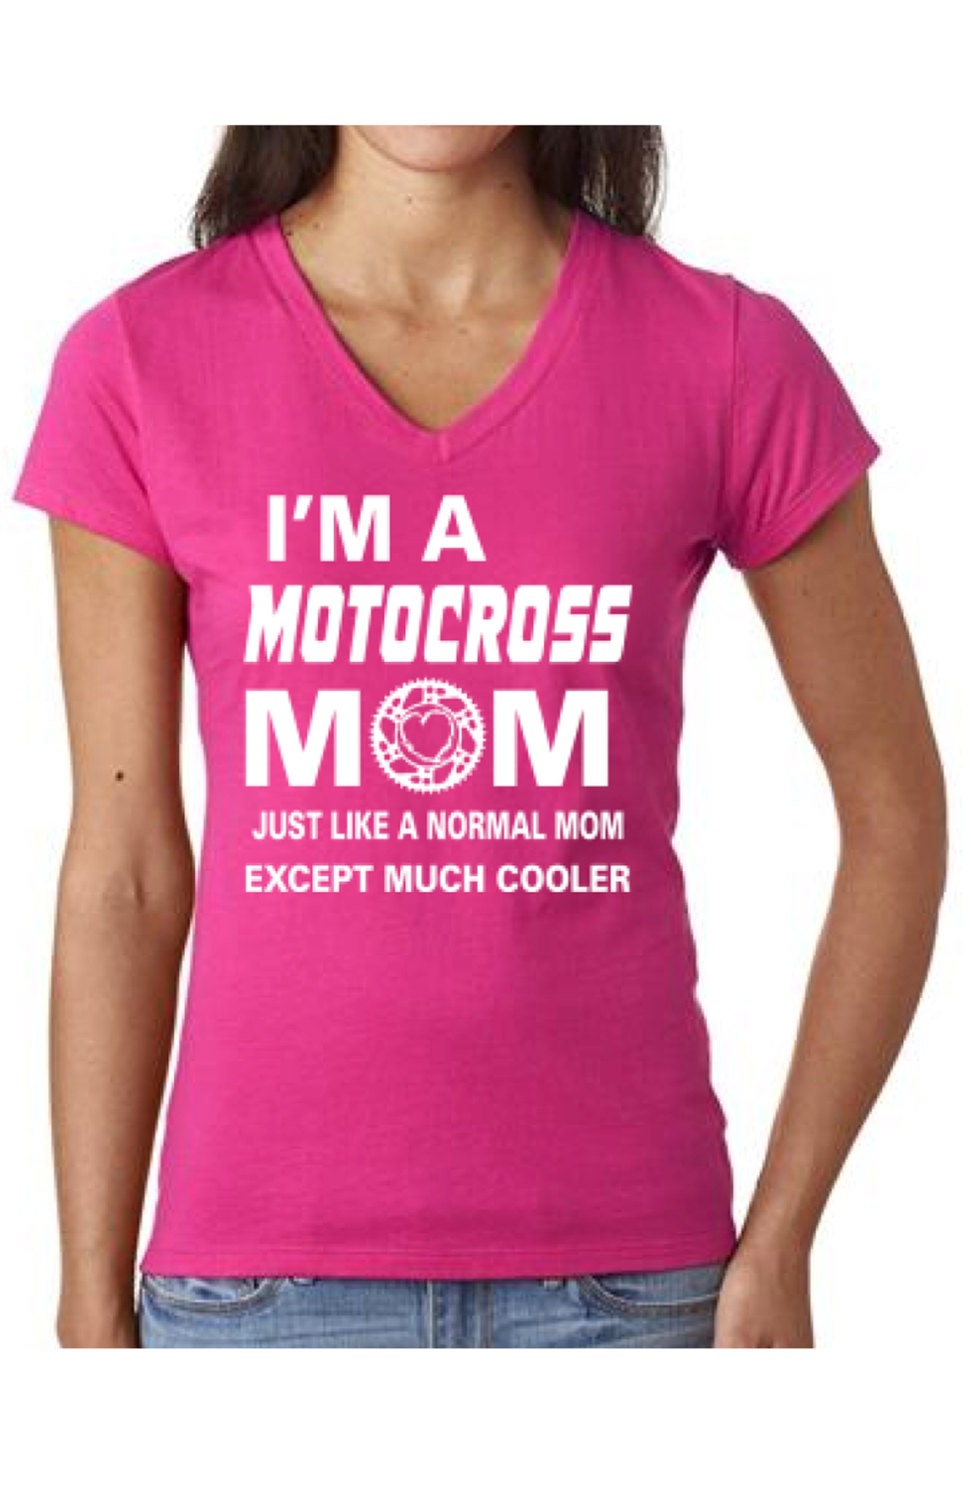 Mom Motocross Motorcycle TShirt